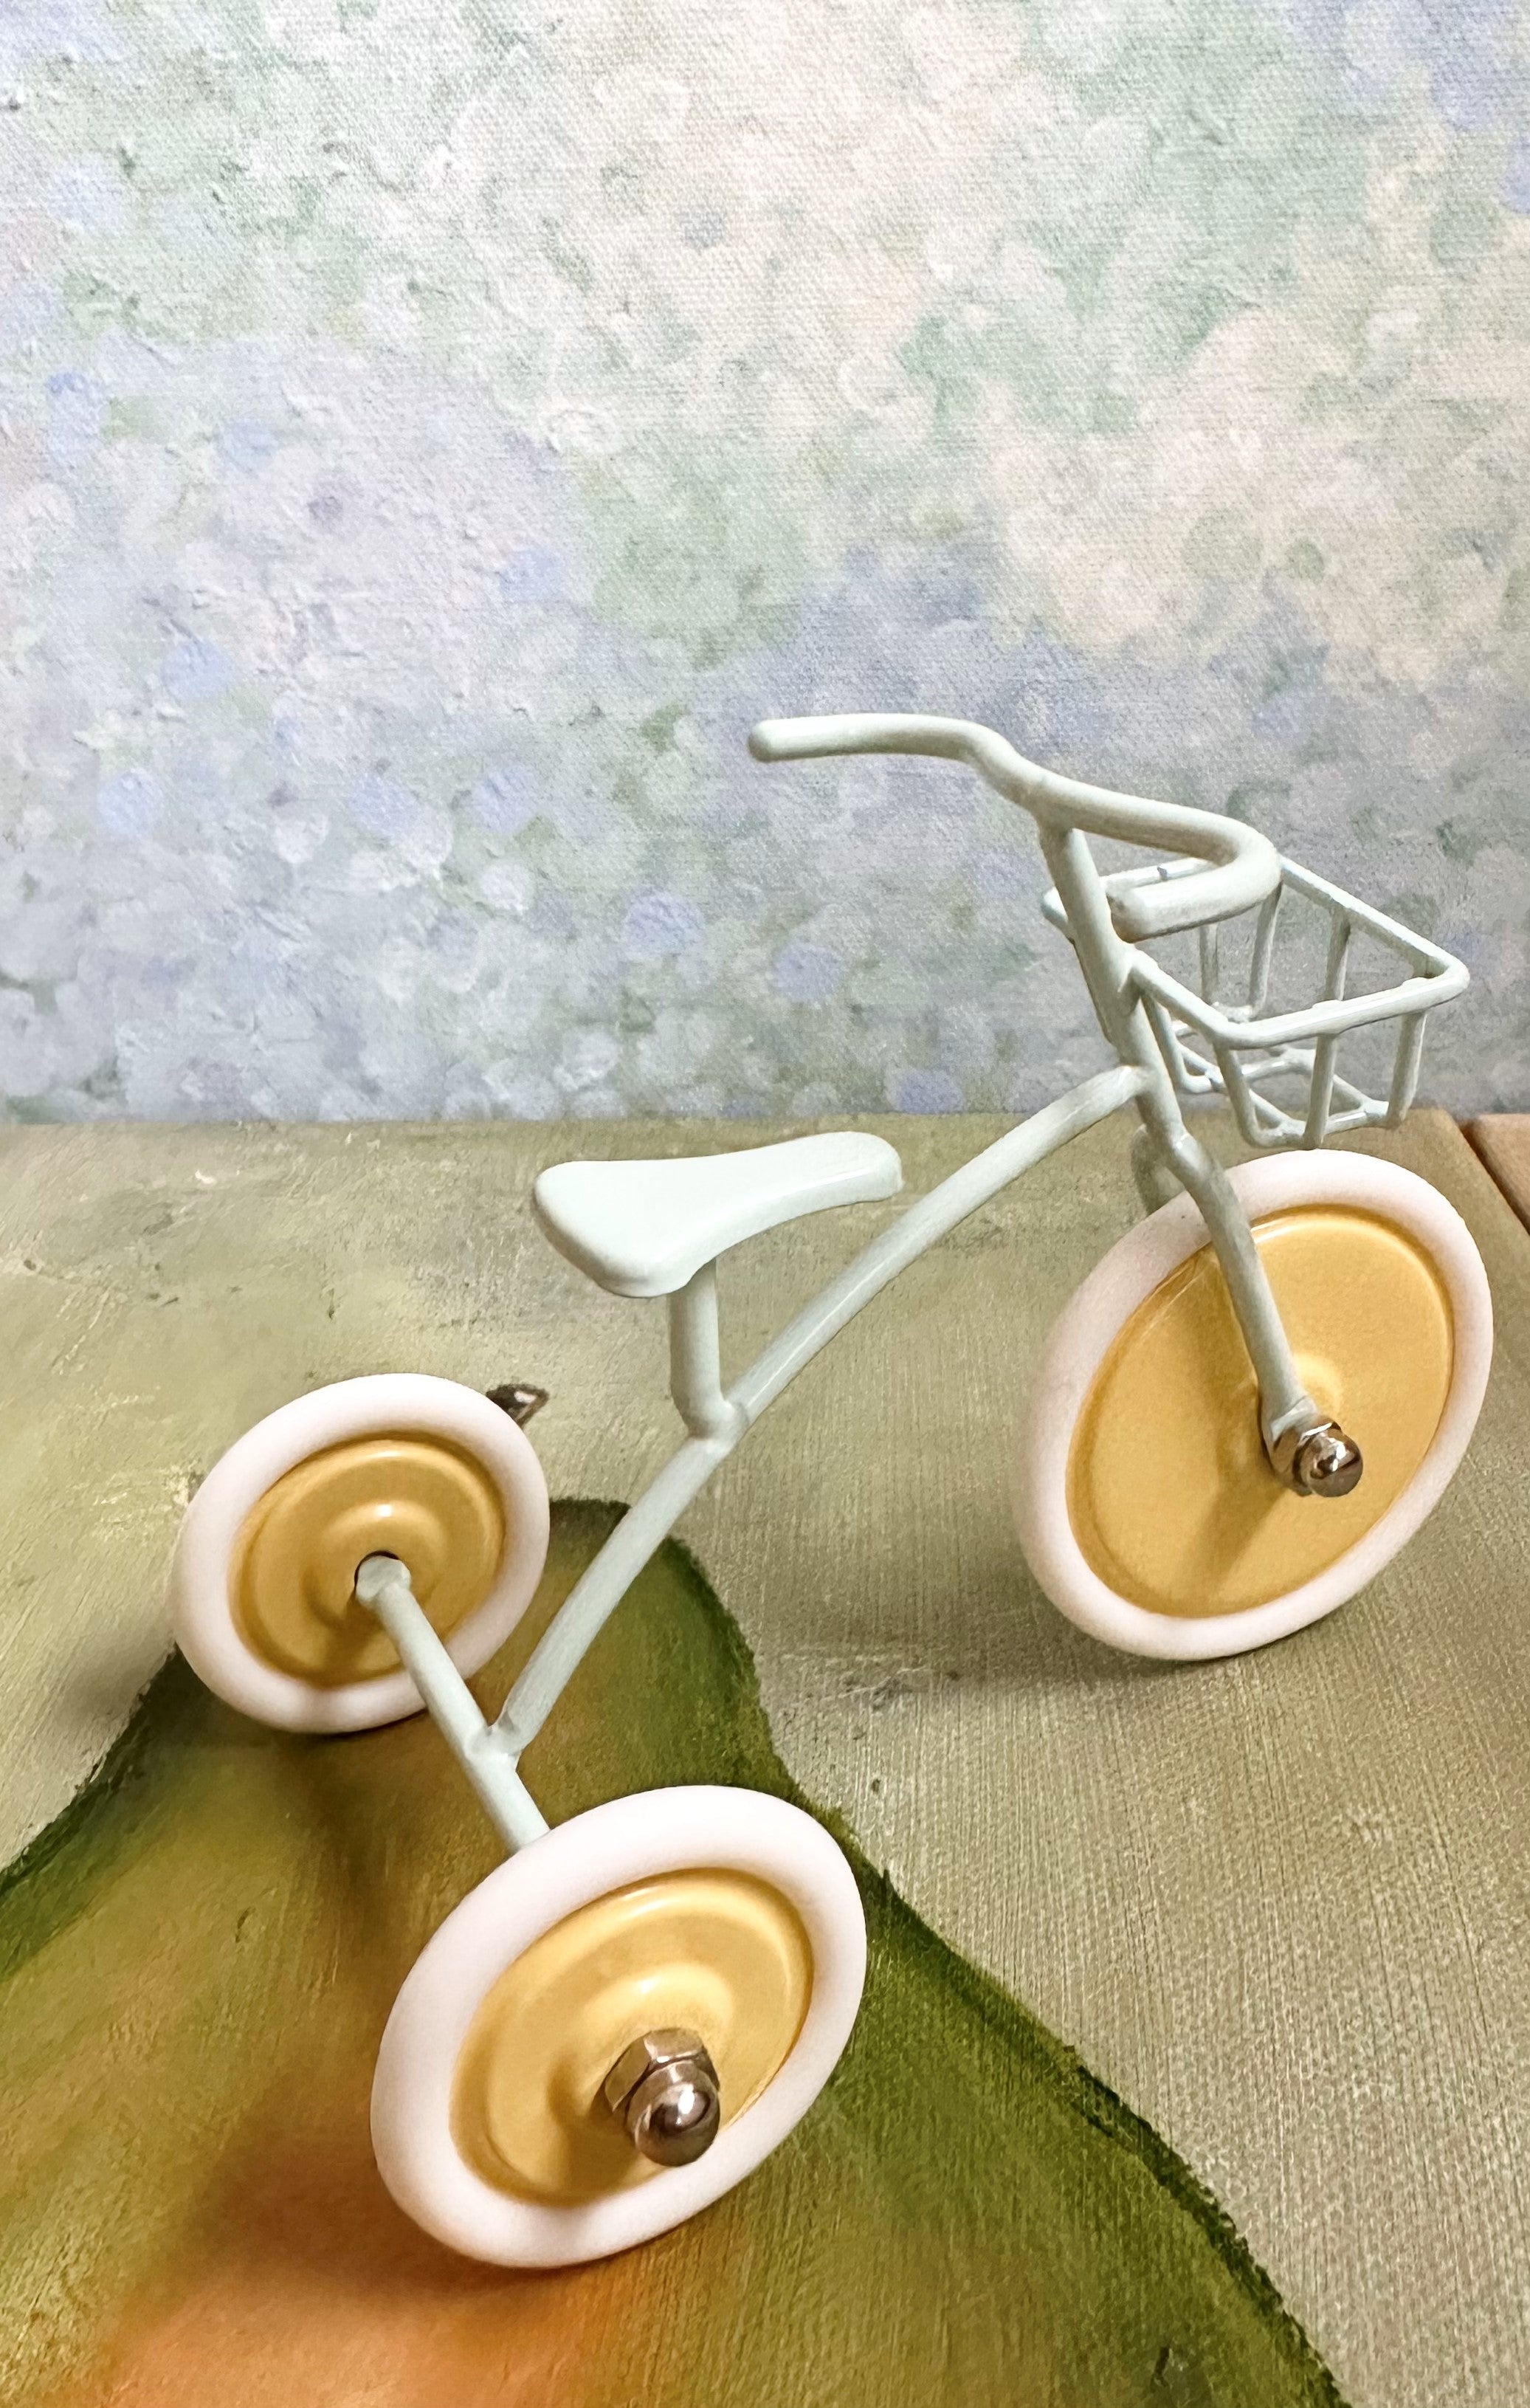 Mini Tricycle